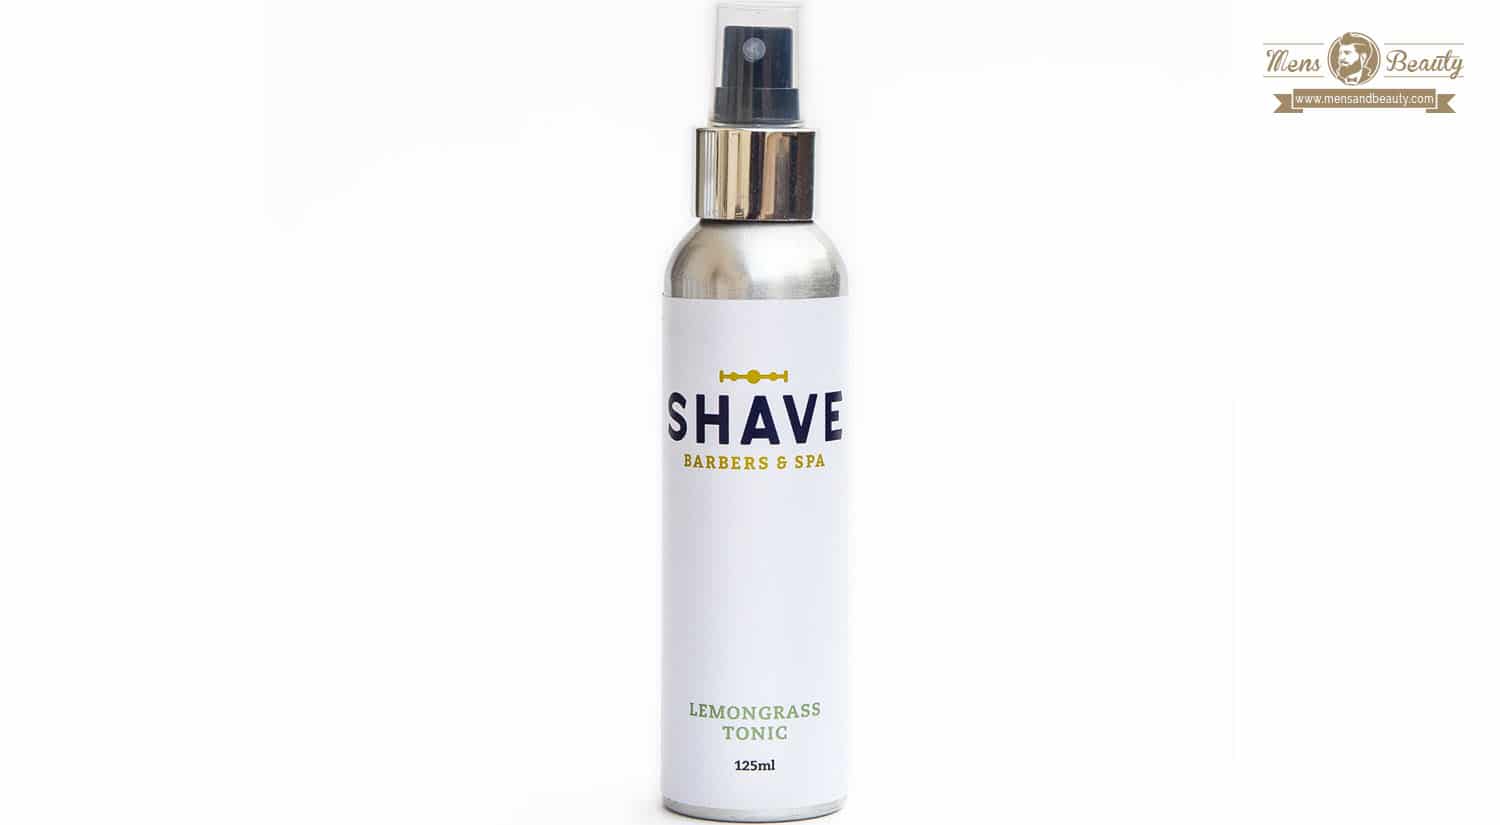 mejores productos belleza para hombre shave barbers spa the shave club tonico afeitado emon grass tonic